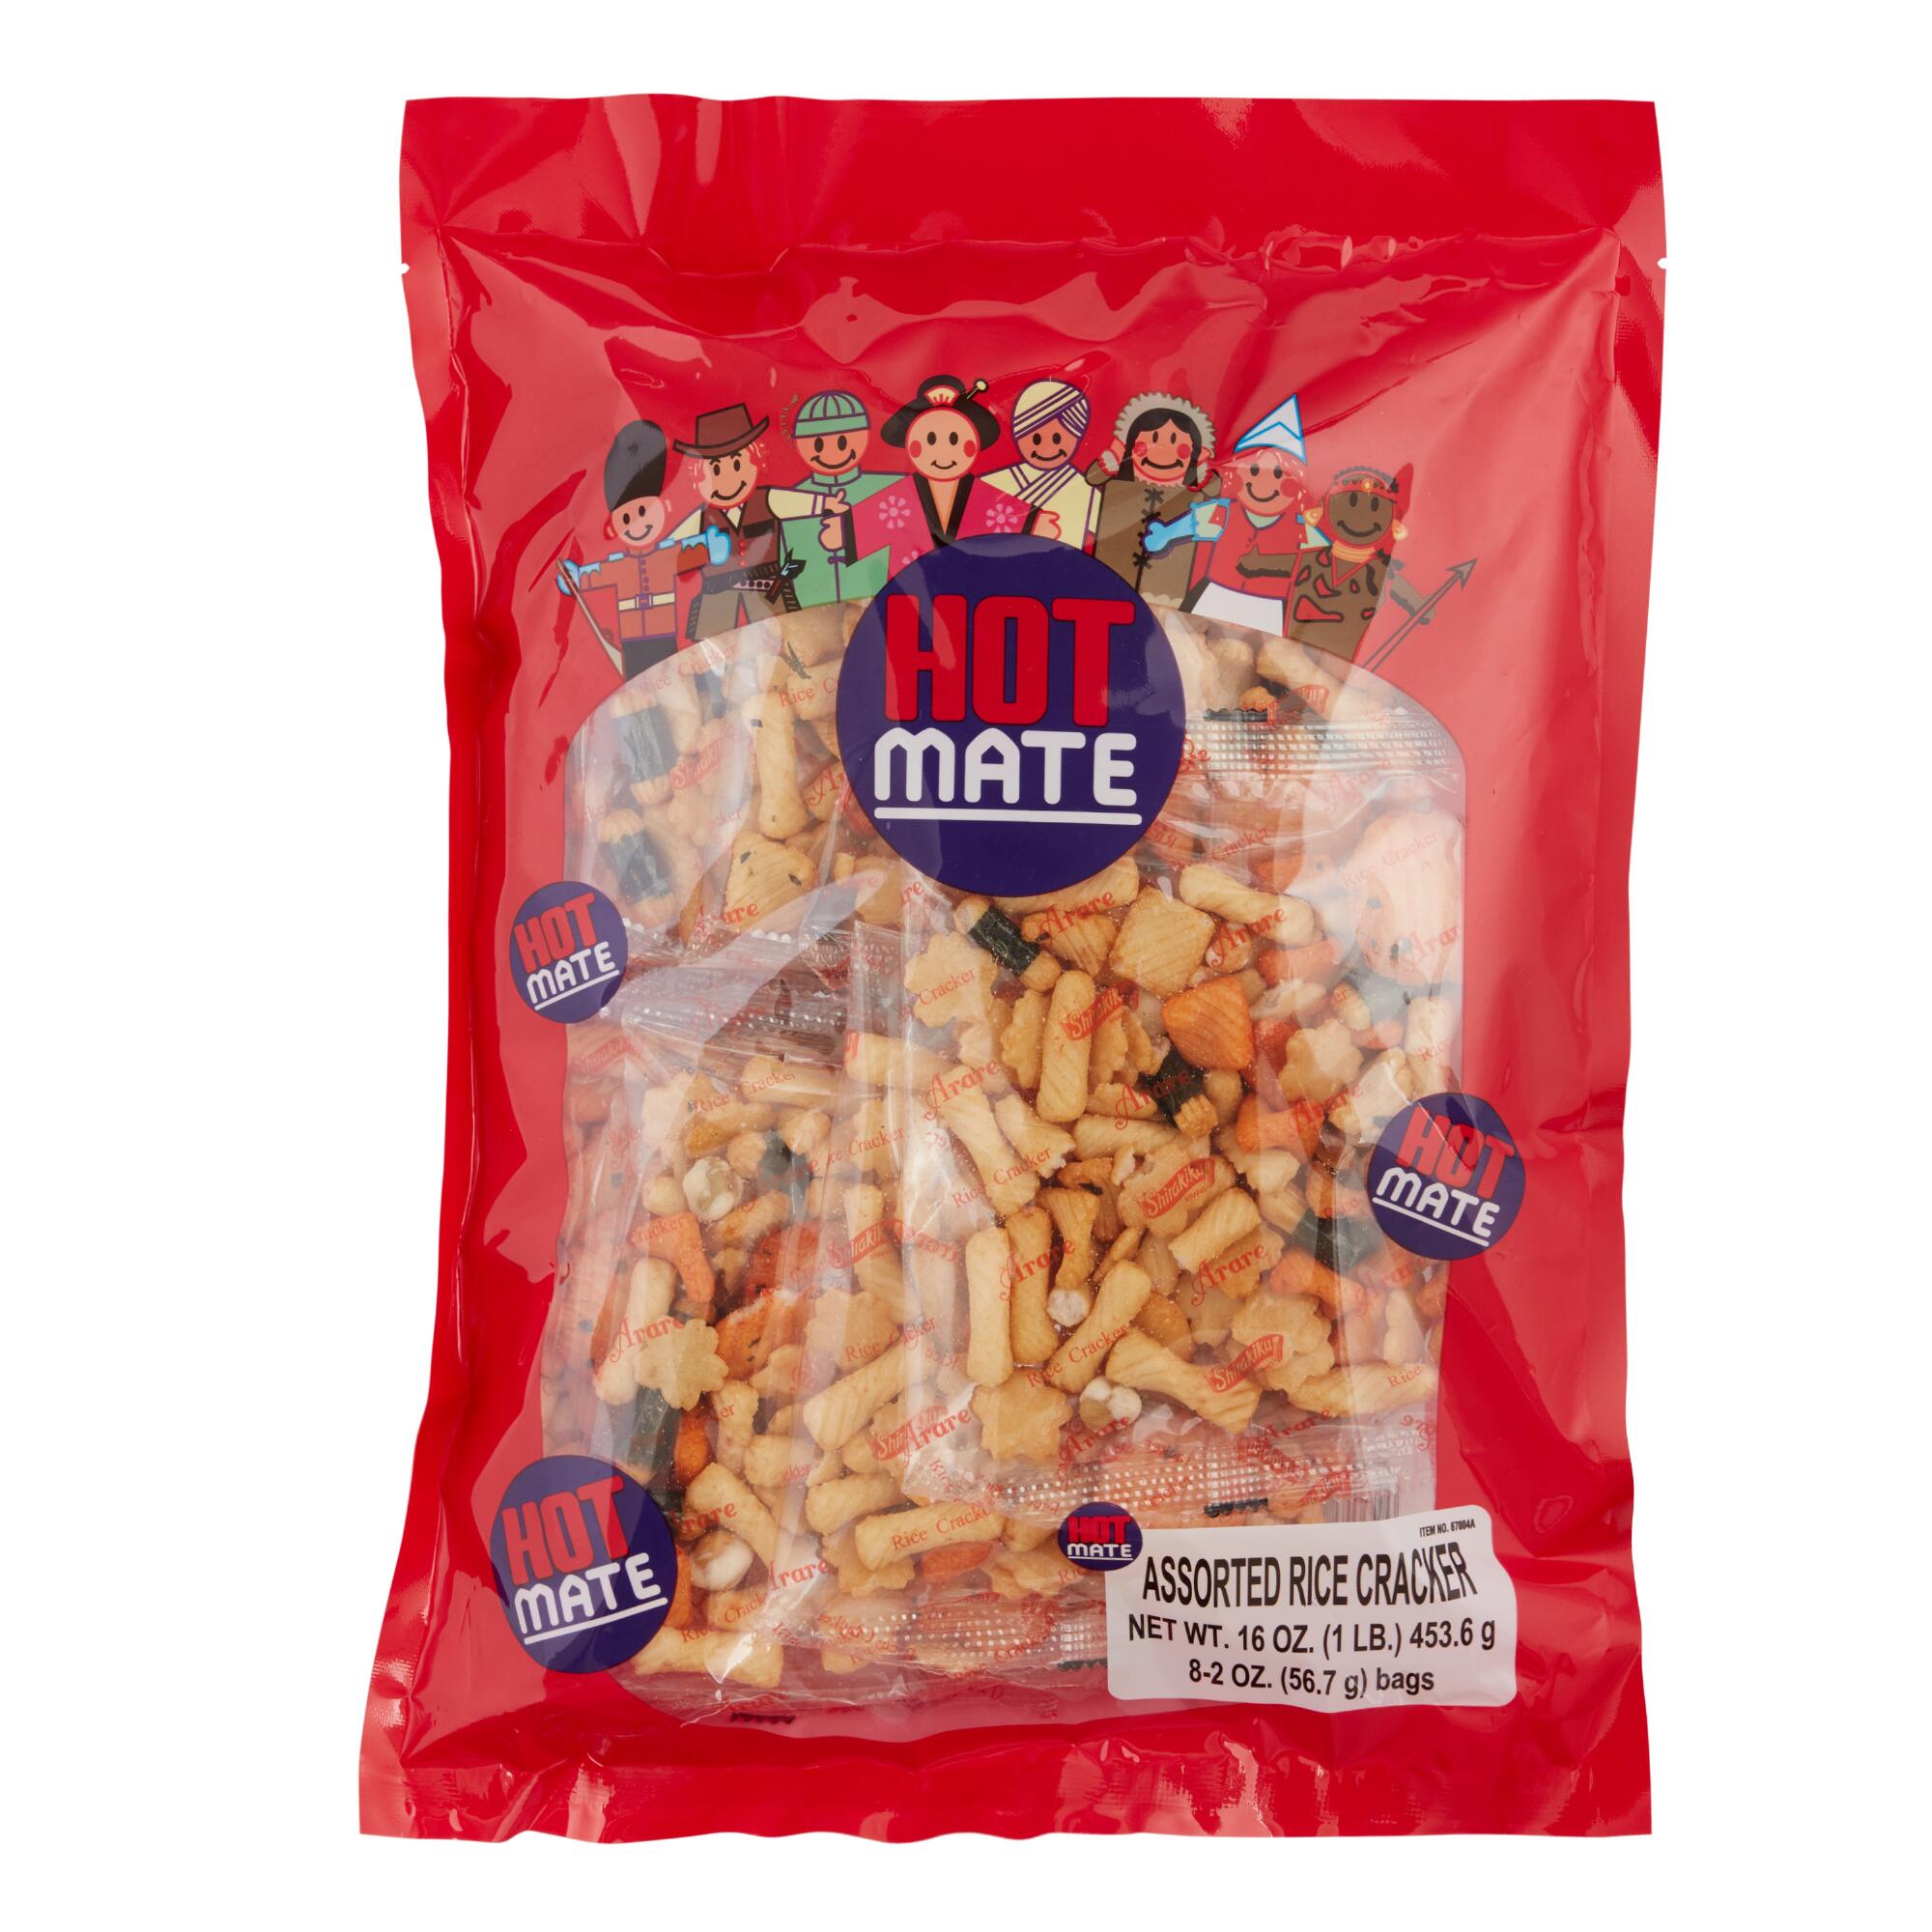 Hot Mate Arare Rice Cracker Mix by World Market